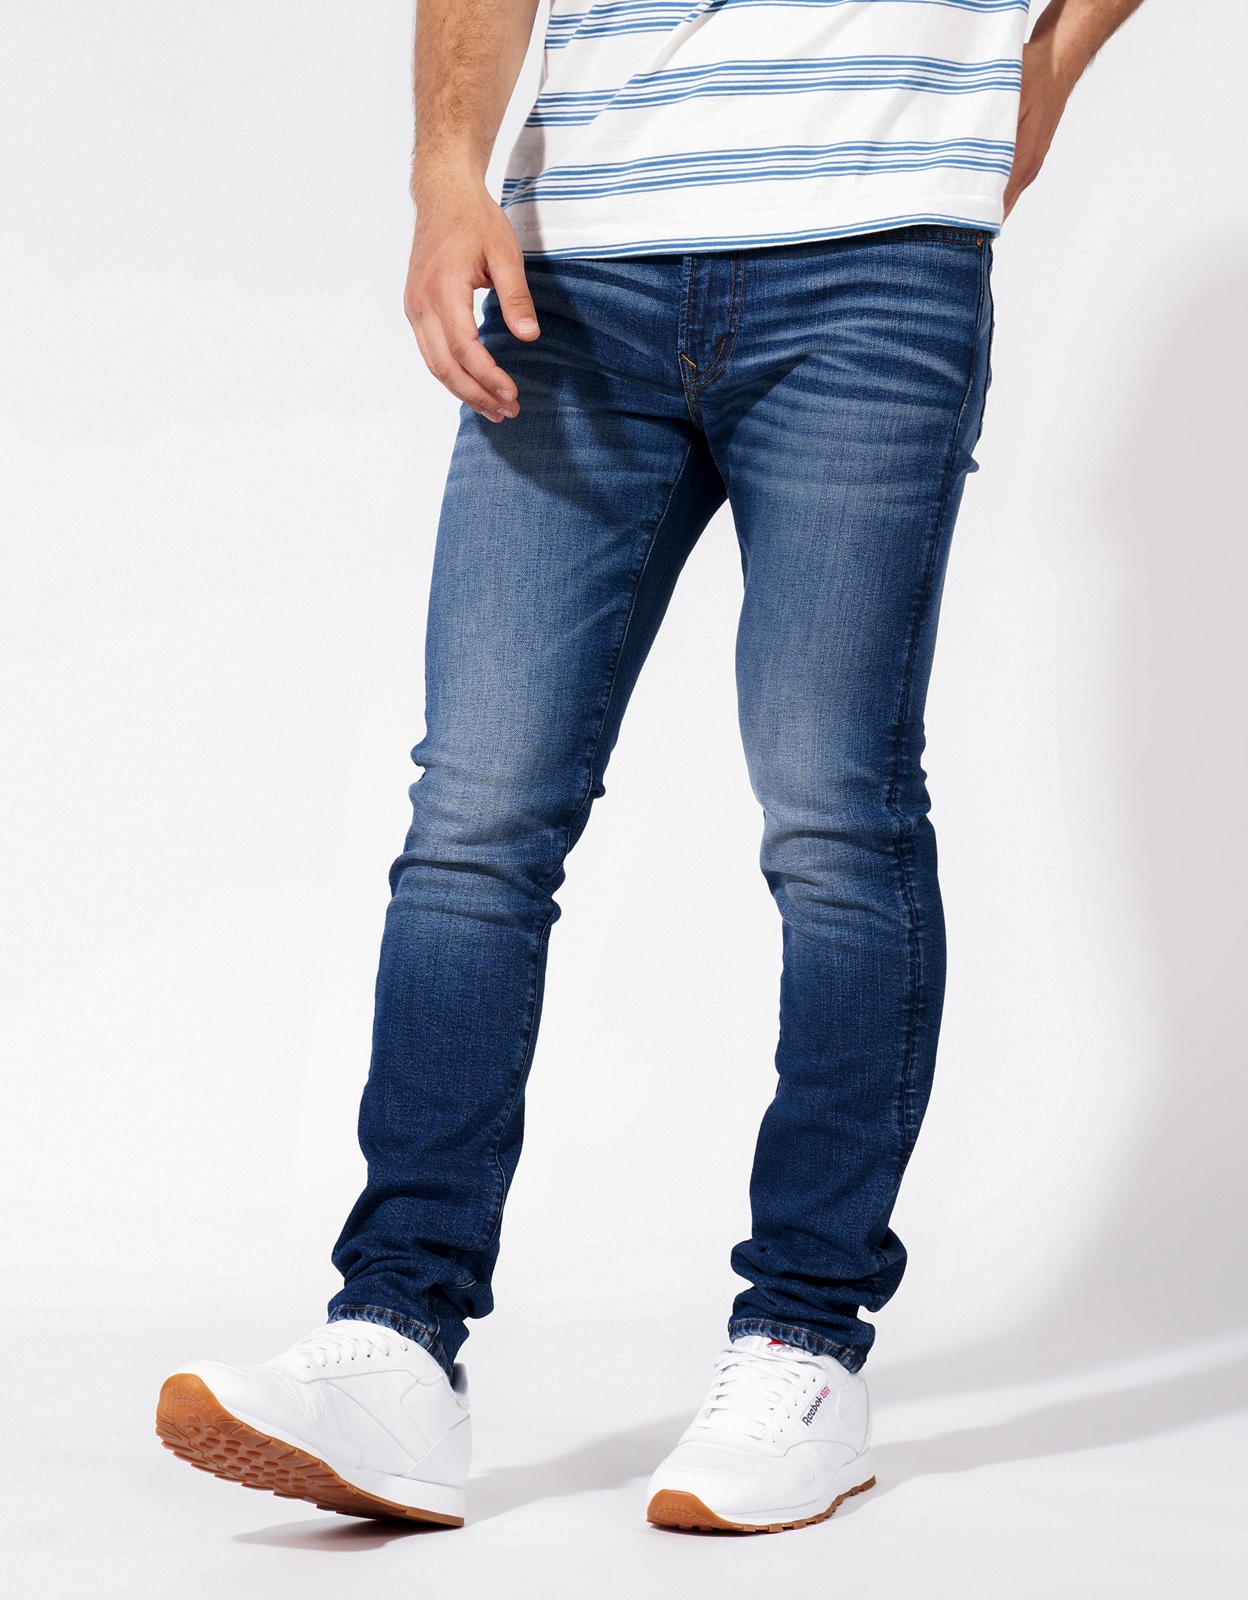 Buy AE AirFlex+ Athletic Skinny Jean online | American Eagle Outfitters UAE